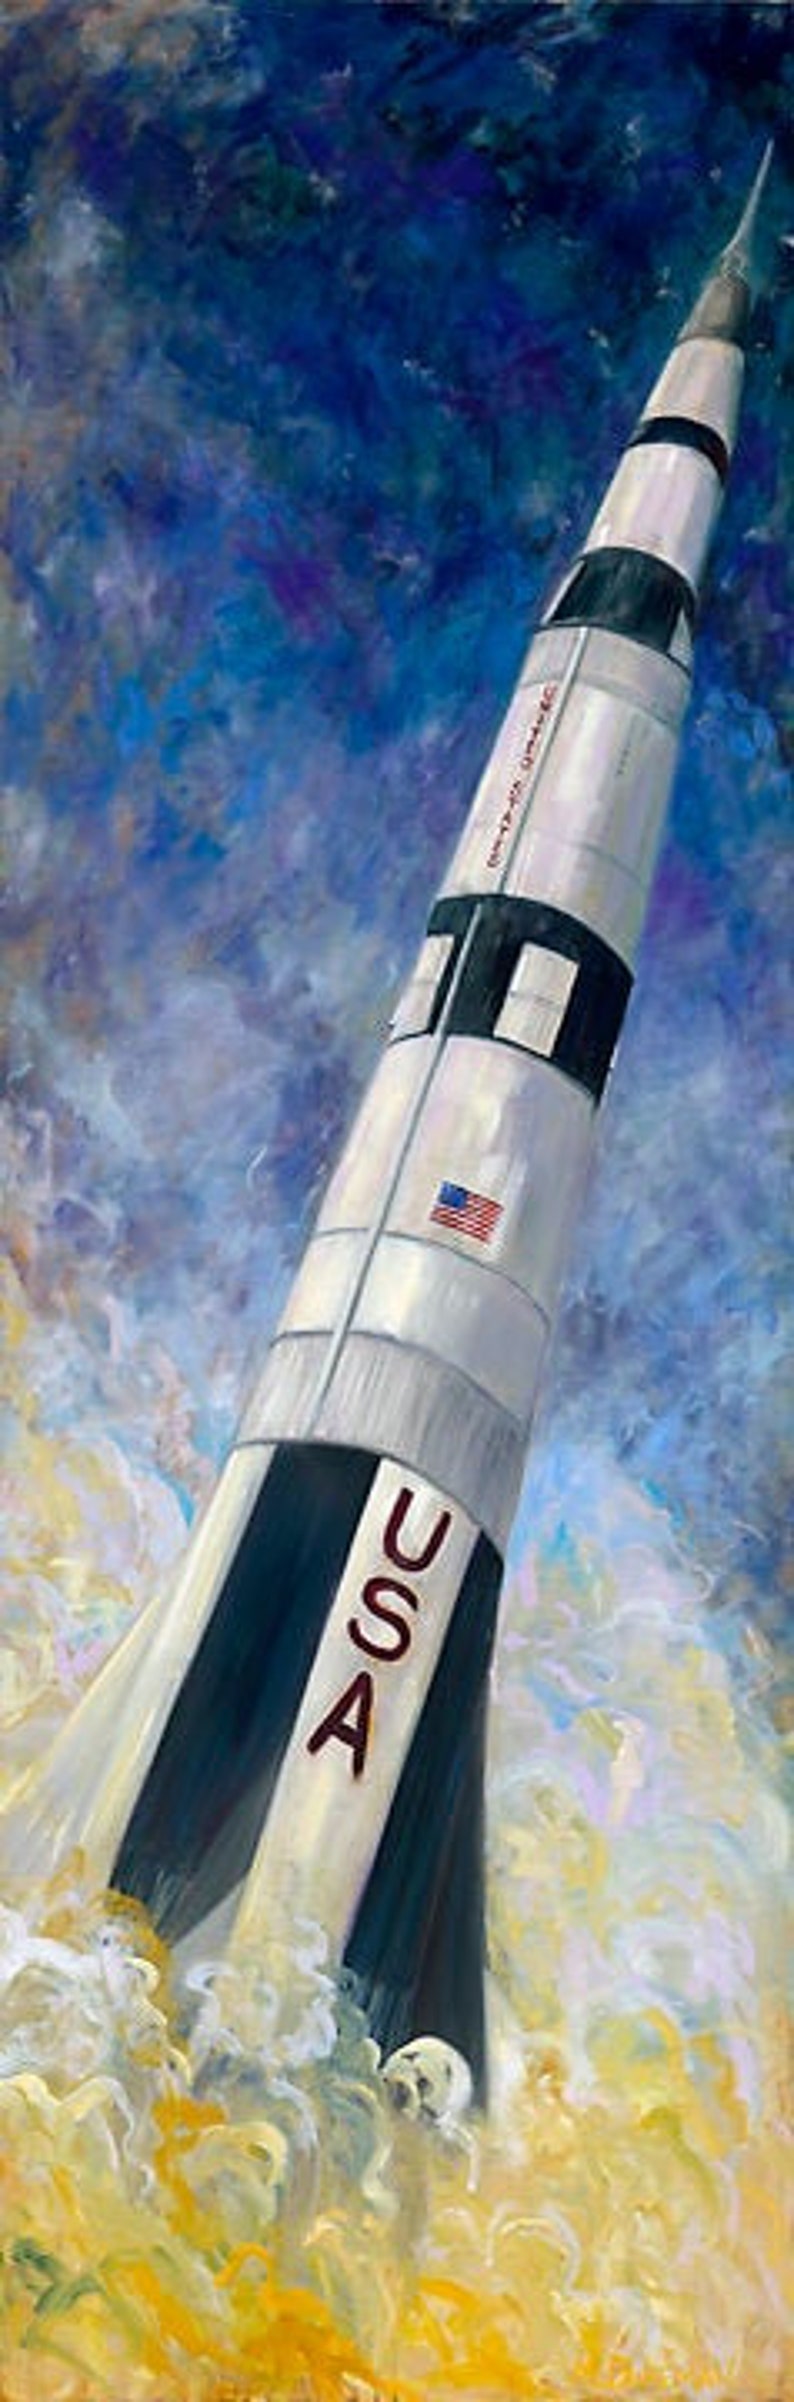 Saturn V Rocket, Apollo 11, NASA, 50th Anniversary of Moon Landing, Space, Mars, Aerospace, Man Cave, Gravity, Planets, American Flag, USA image 1